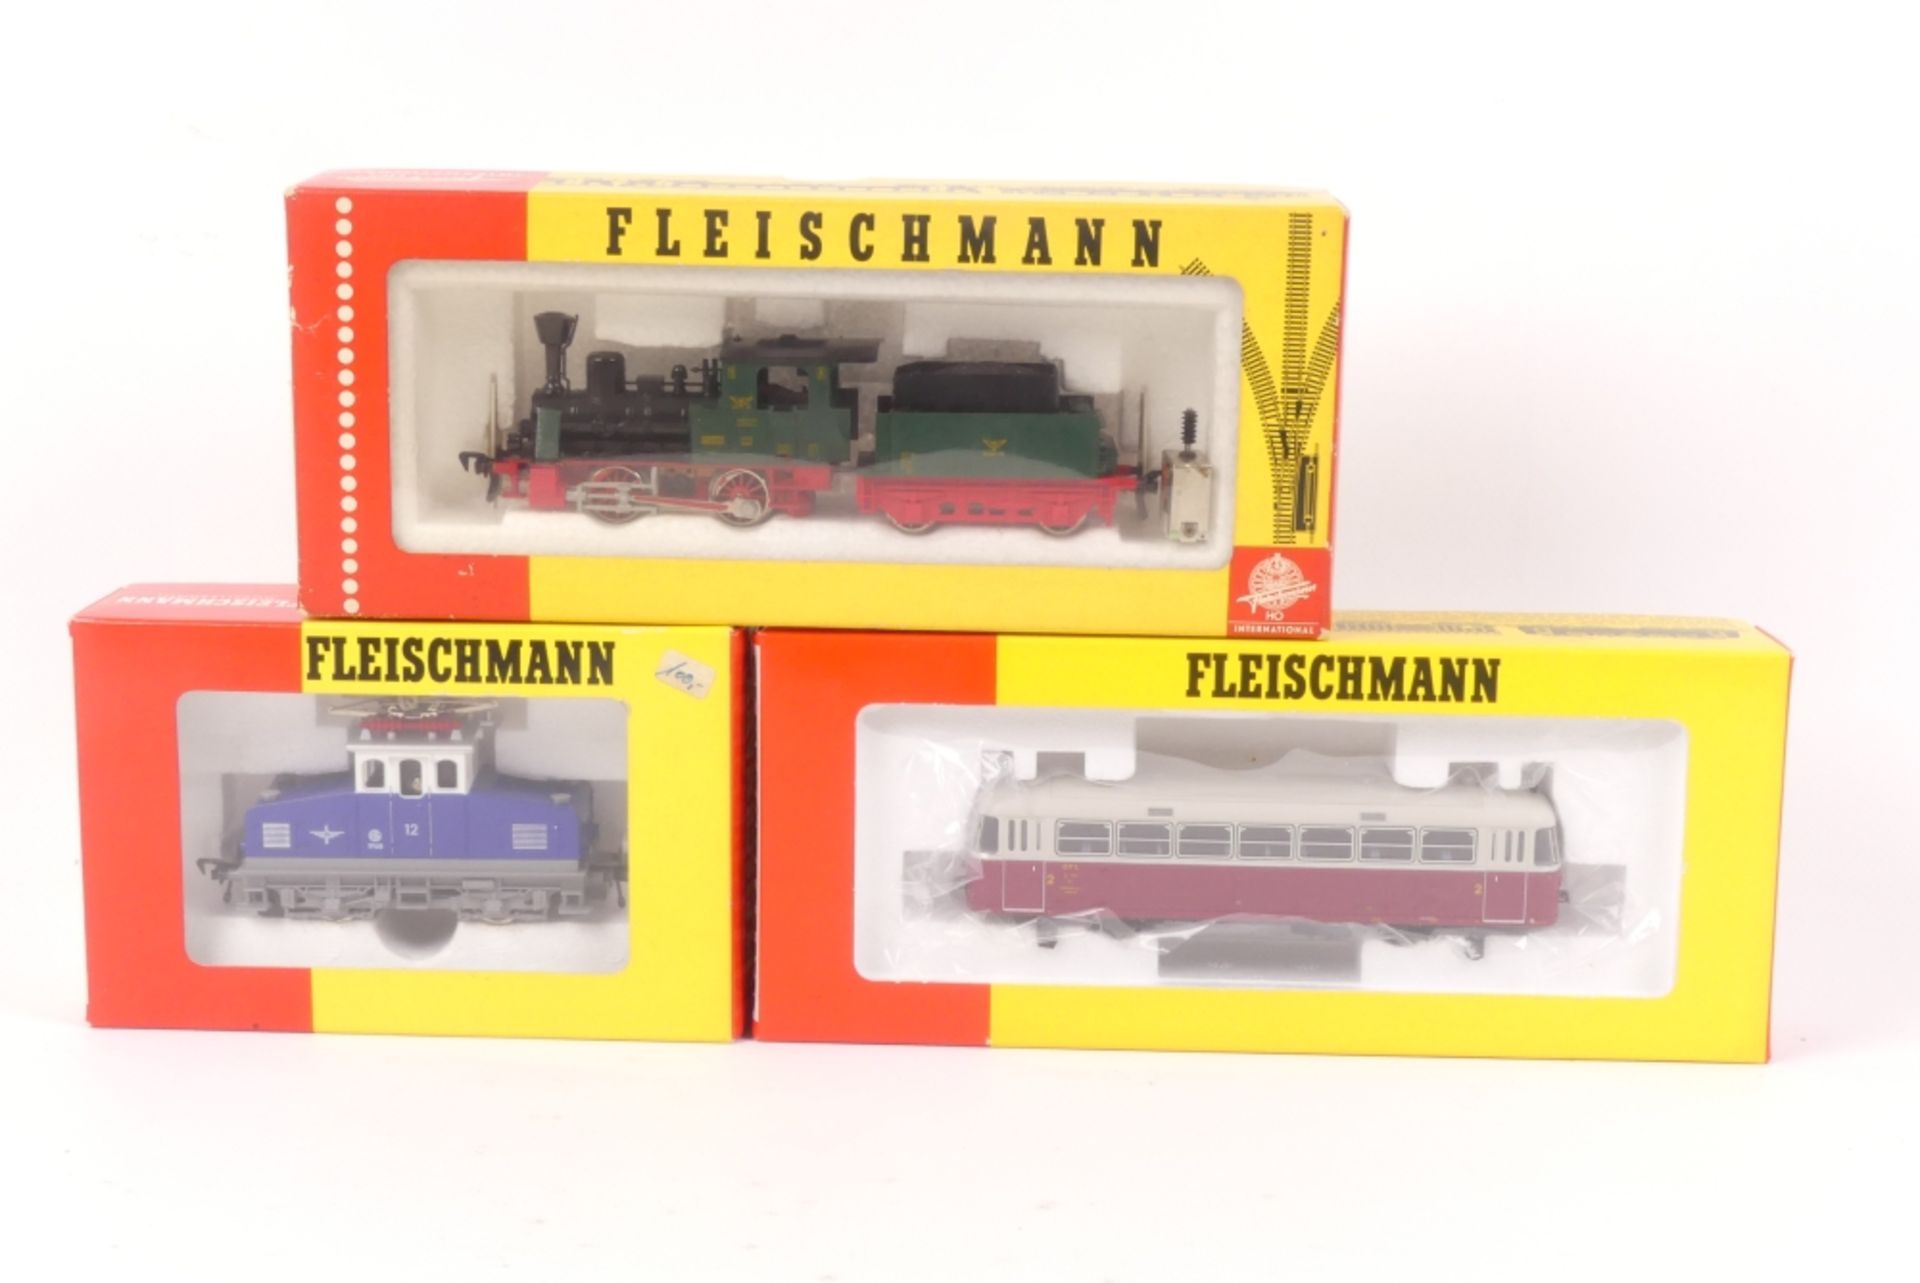 Drei Fleischmann TriebfahrzeugeDrei Fleischmann Triebfahrzeuge, 4305, E-Lok, 91 4405 L